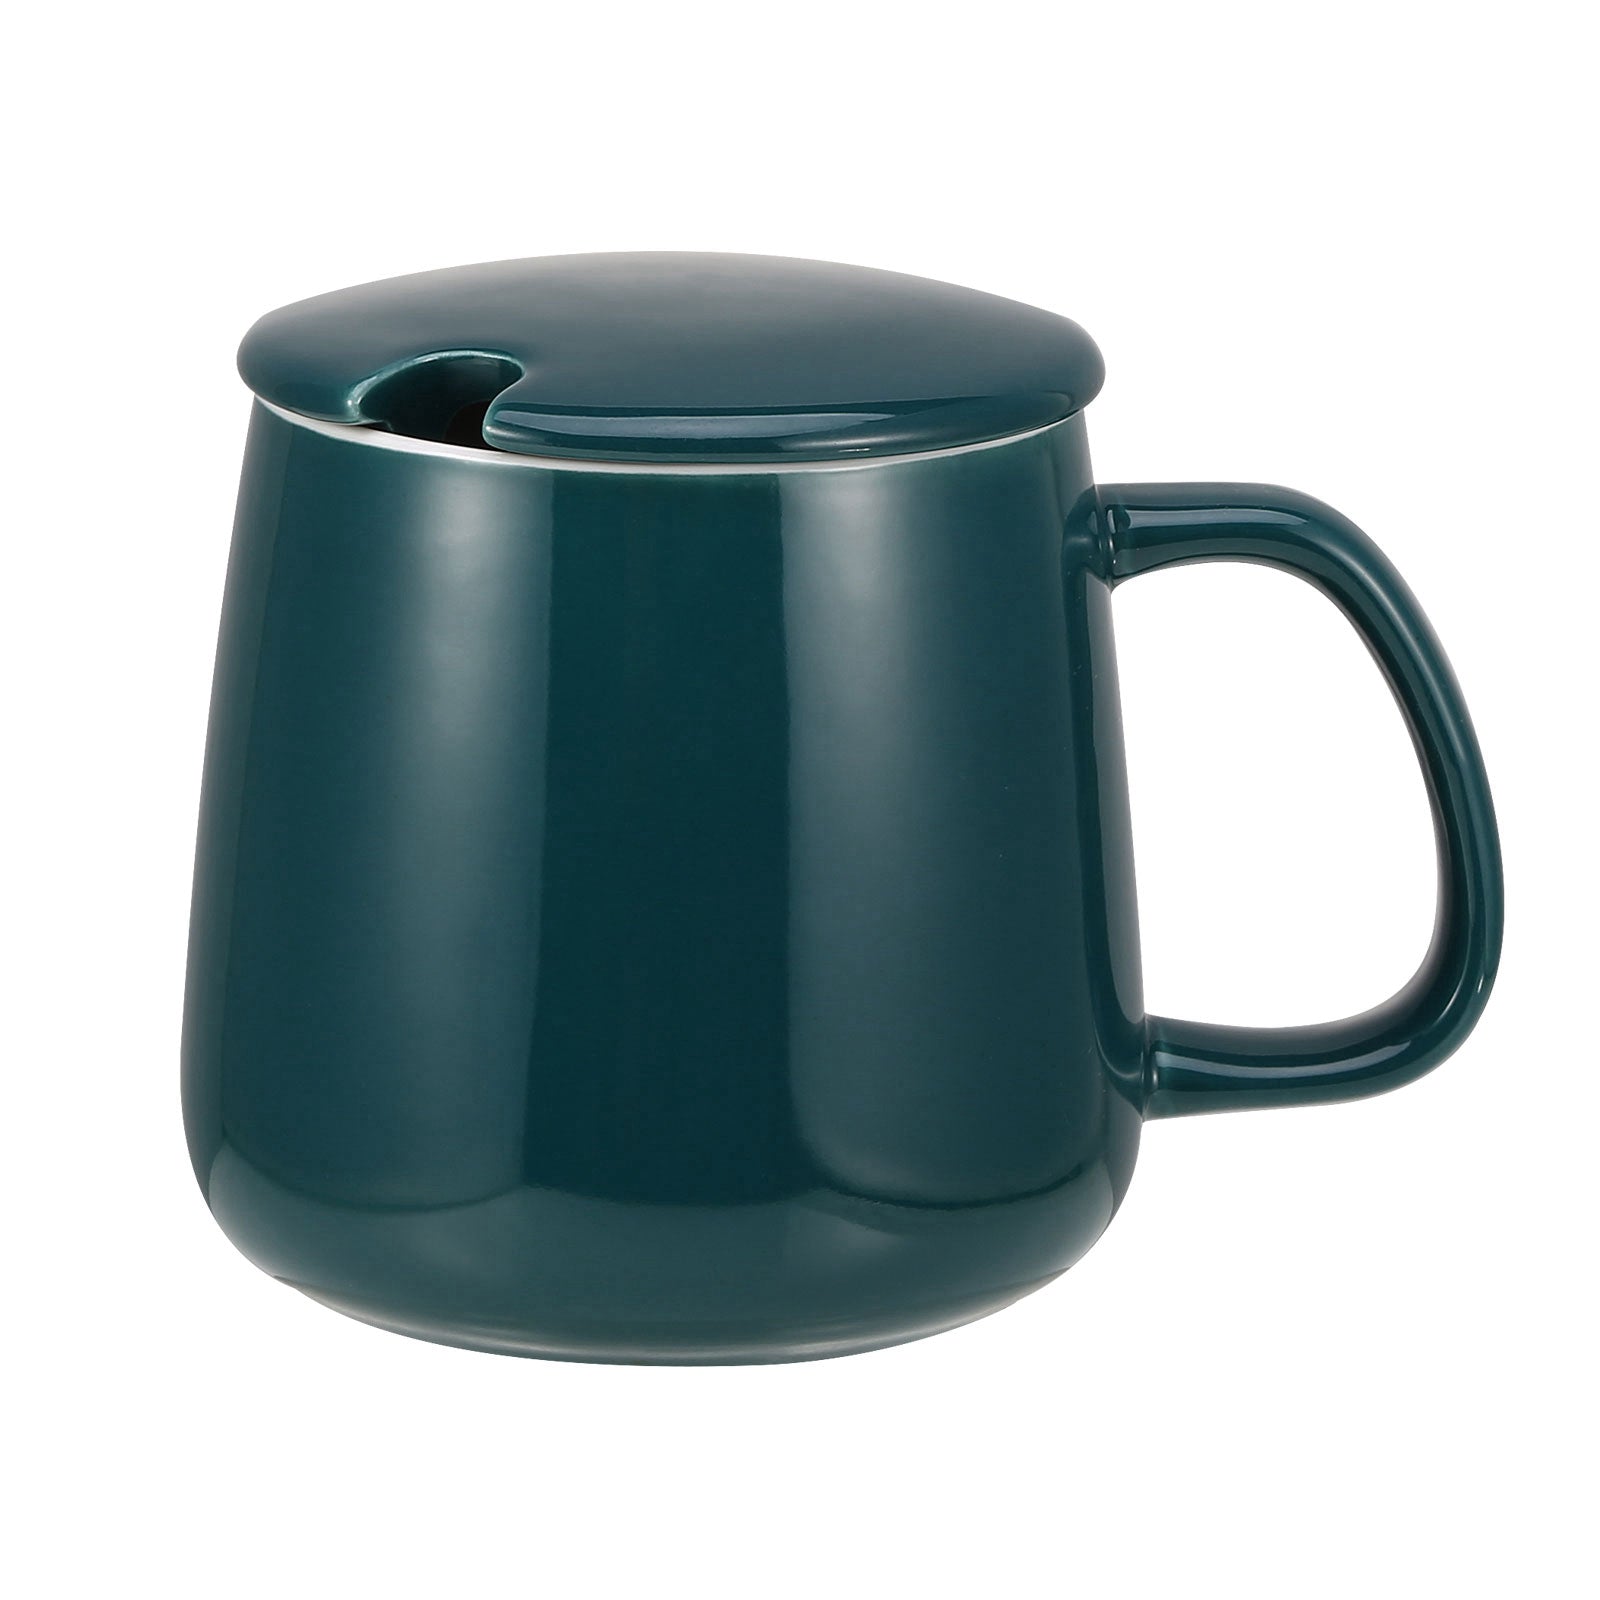 VOBAGA 14 oz Tea Mug for Daily Use Warming Coffee&Tea, Coffee Cup with Lid and Flat-Bottom (White)